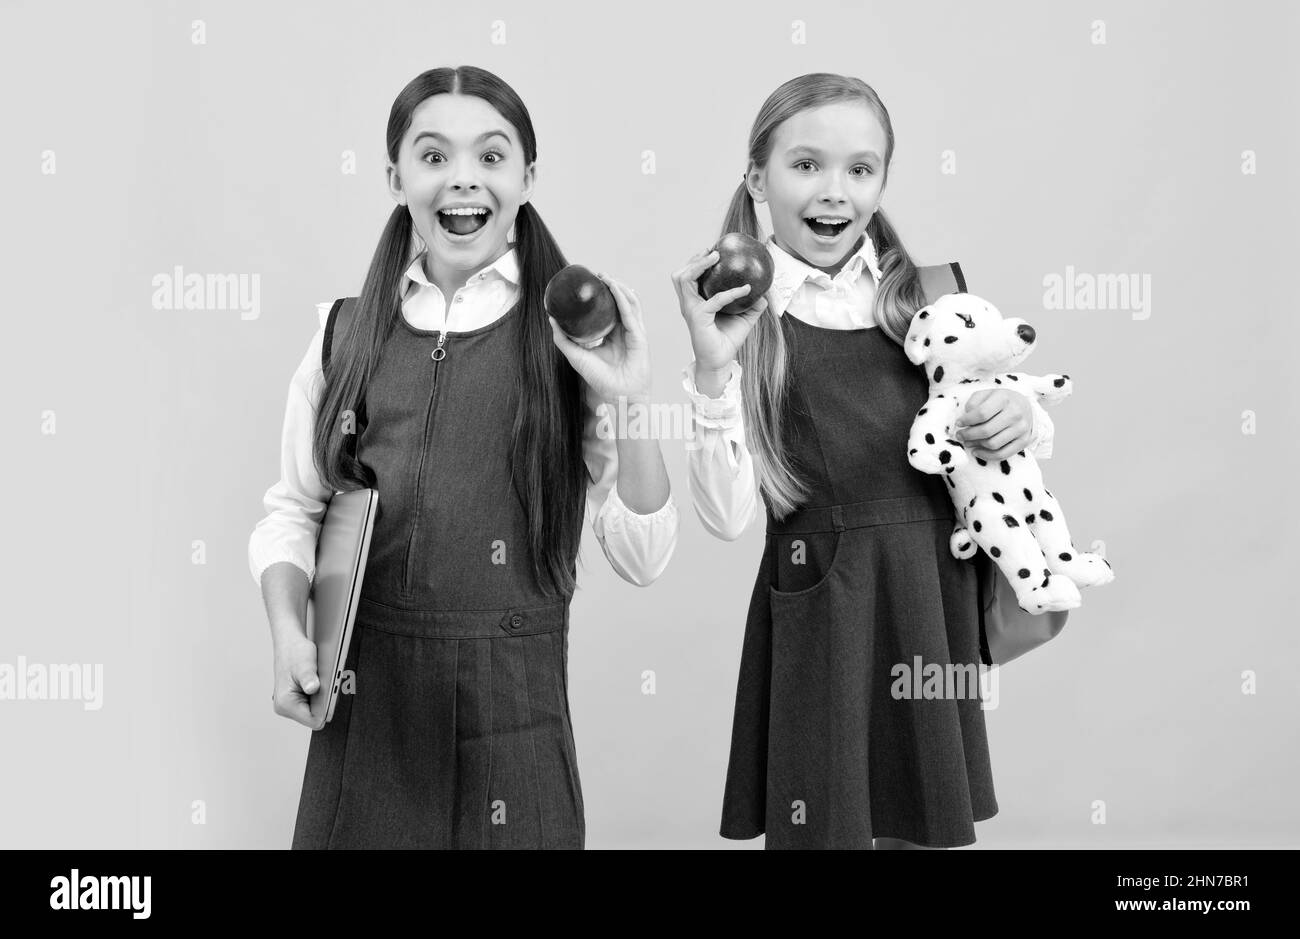 Healthy teeth, yummy eat. Happy kids hold apples. Dental health education. Teeth are always in style Stock Photo